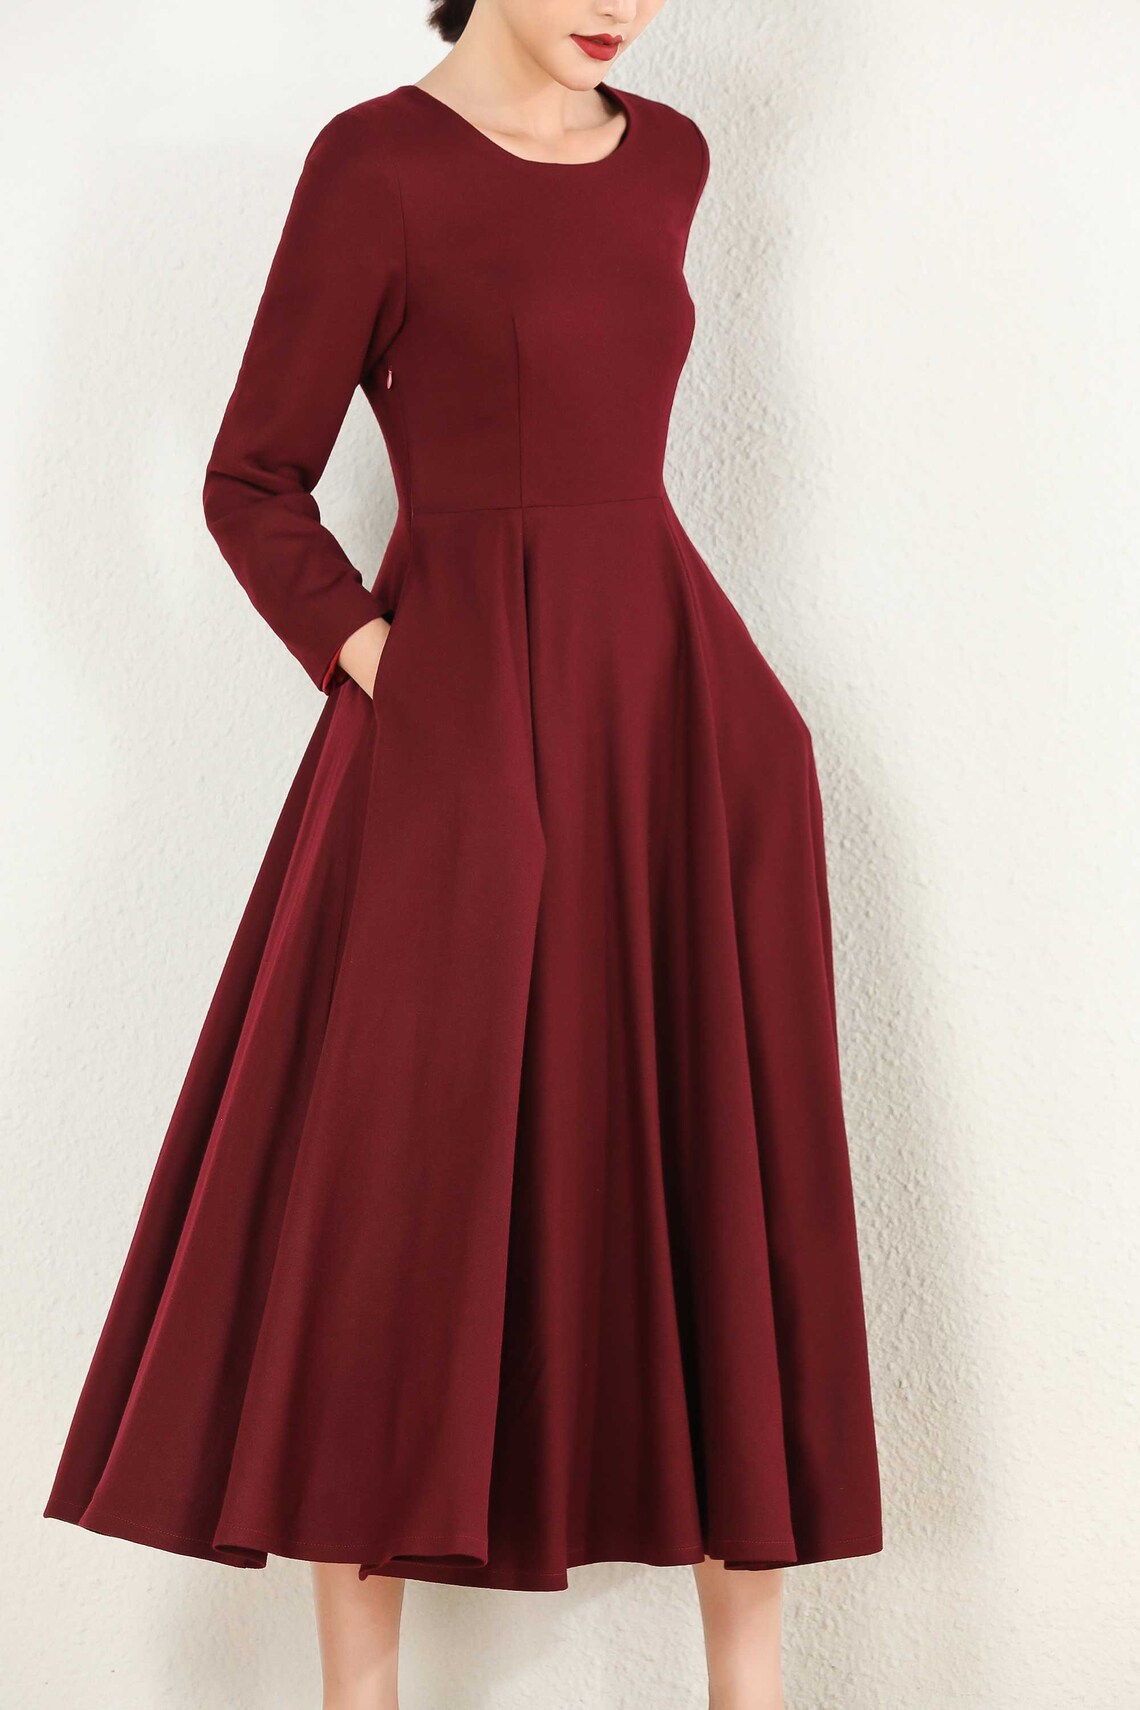 Burgundy wool dress Long sleeve wool dress Long Wool dress | Etsy